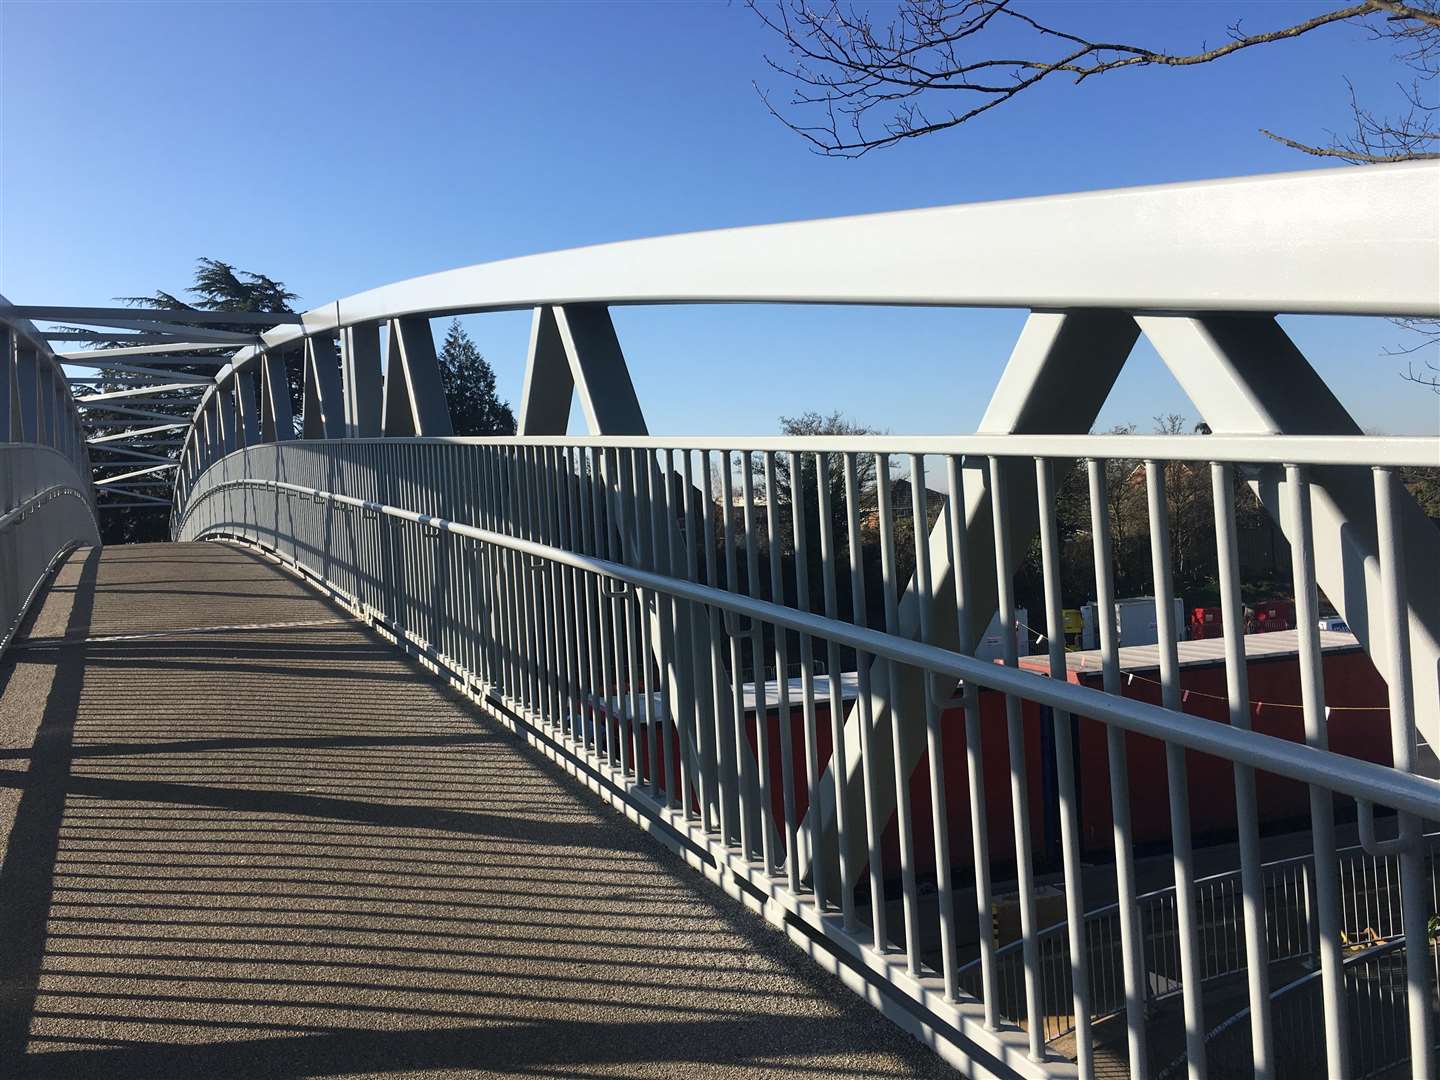 Guard rails are higher on Teapot Lane bridge in Aylesford than some older bridges (7445573)